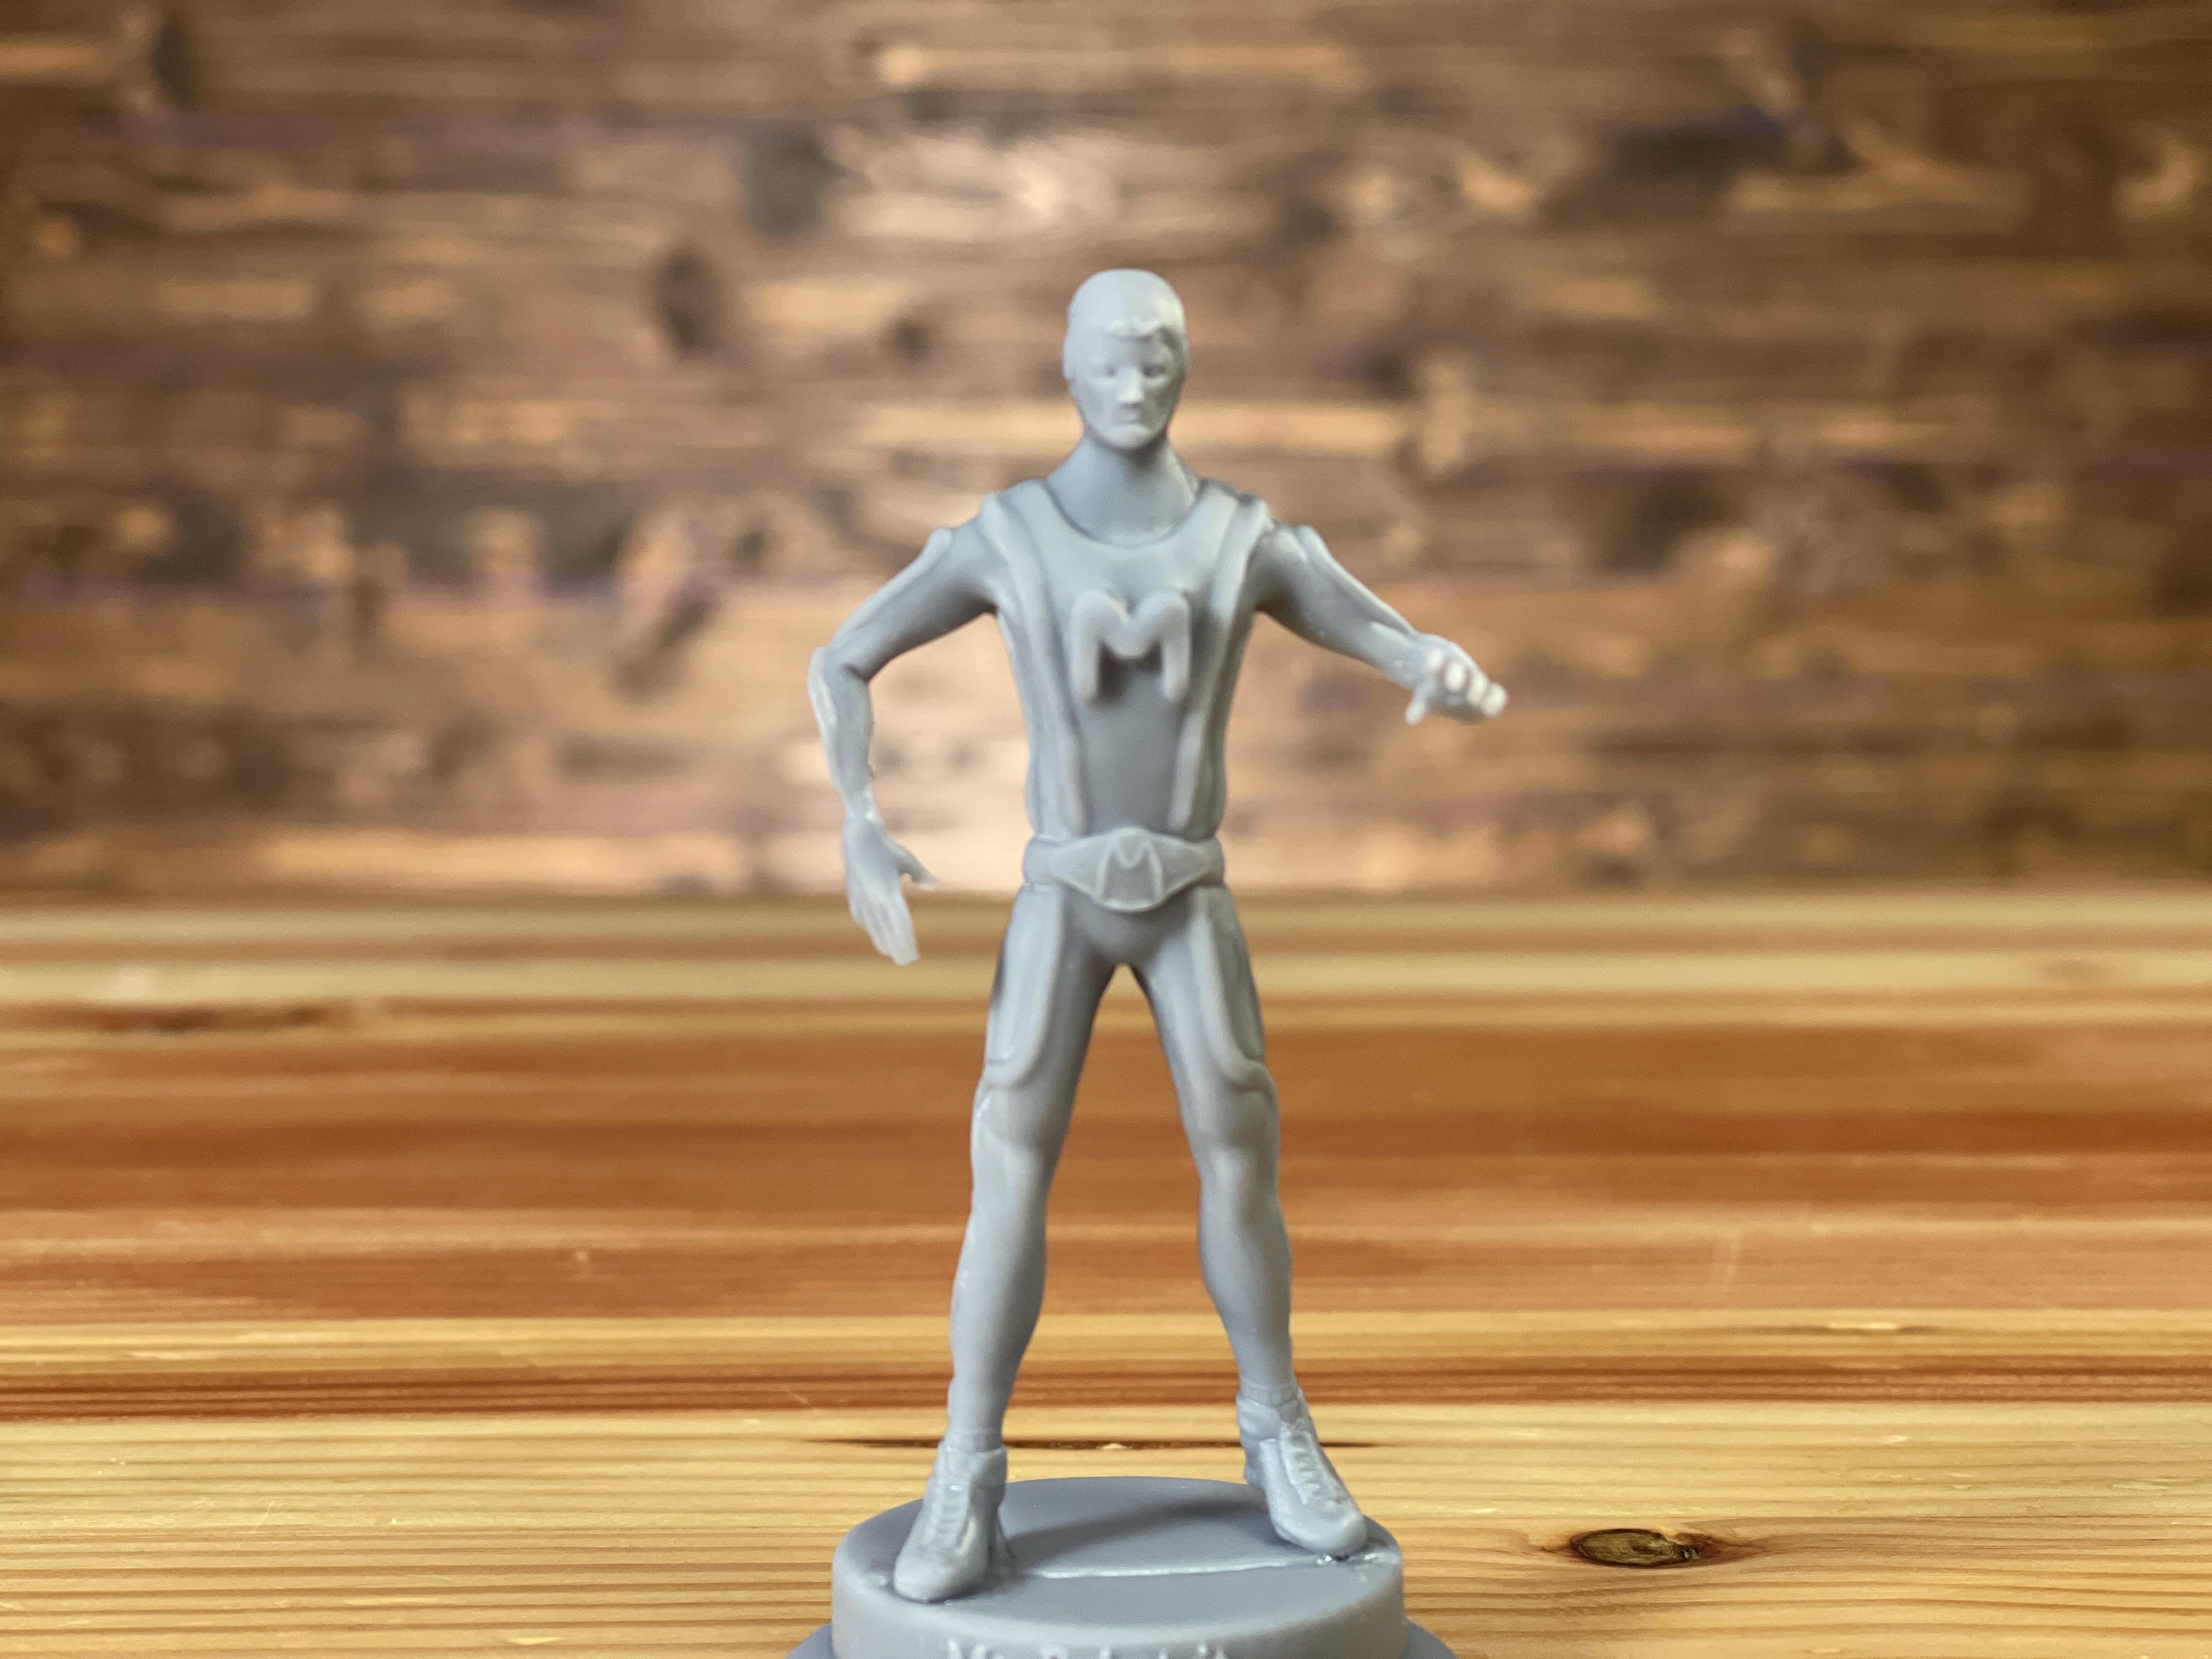 3D Printing Nerd "Make Me a Super Hero" by proffhobbs